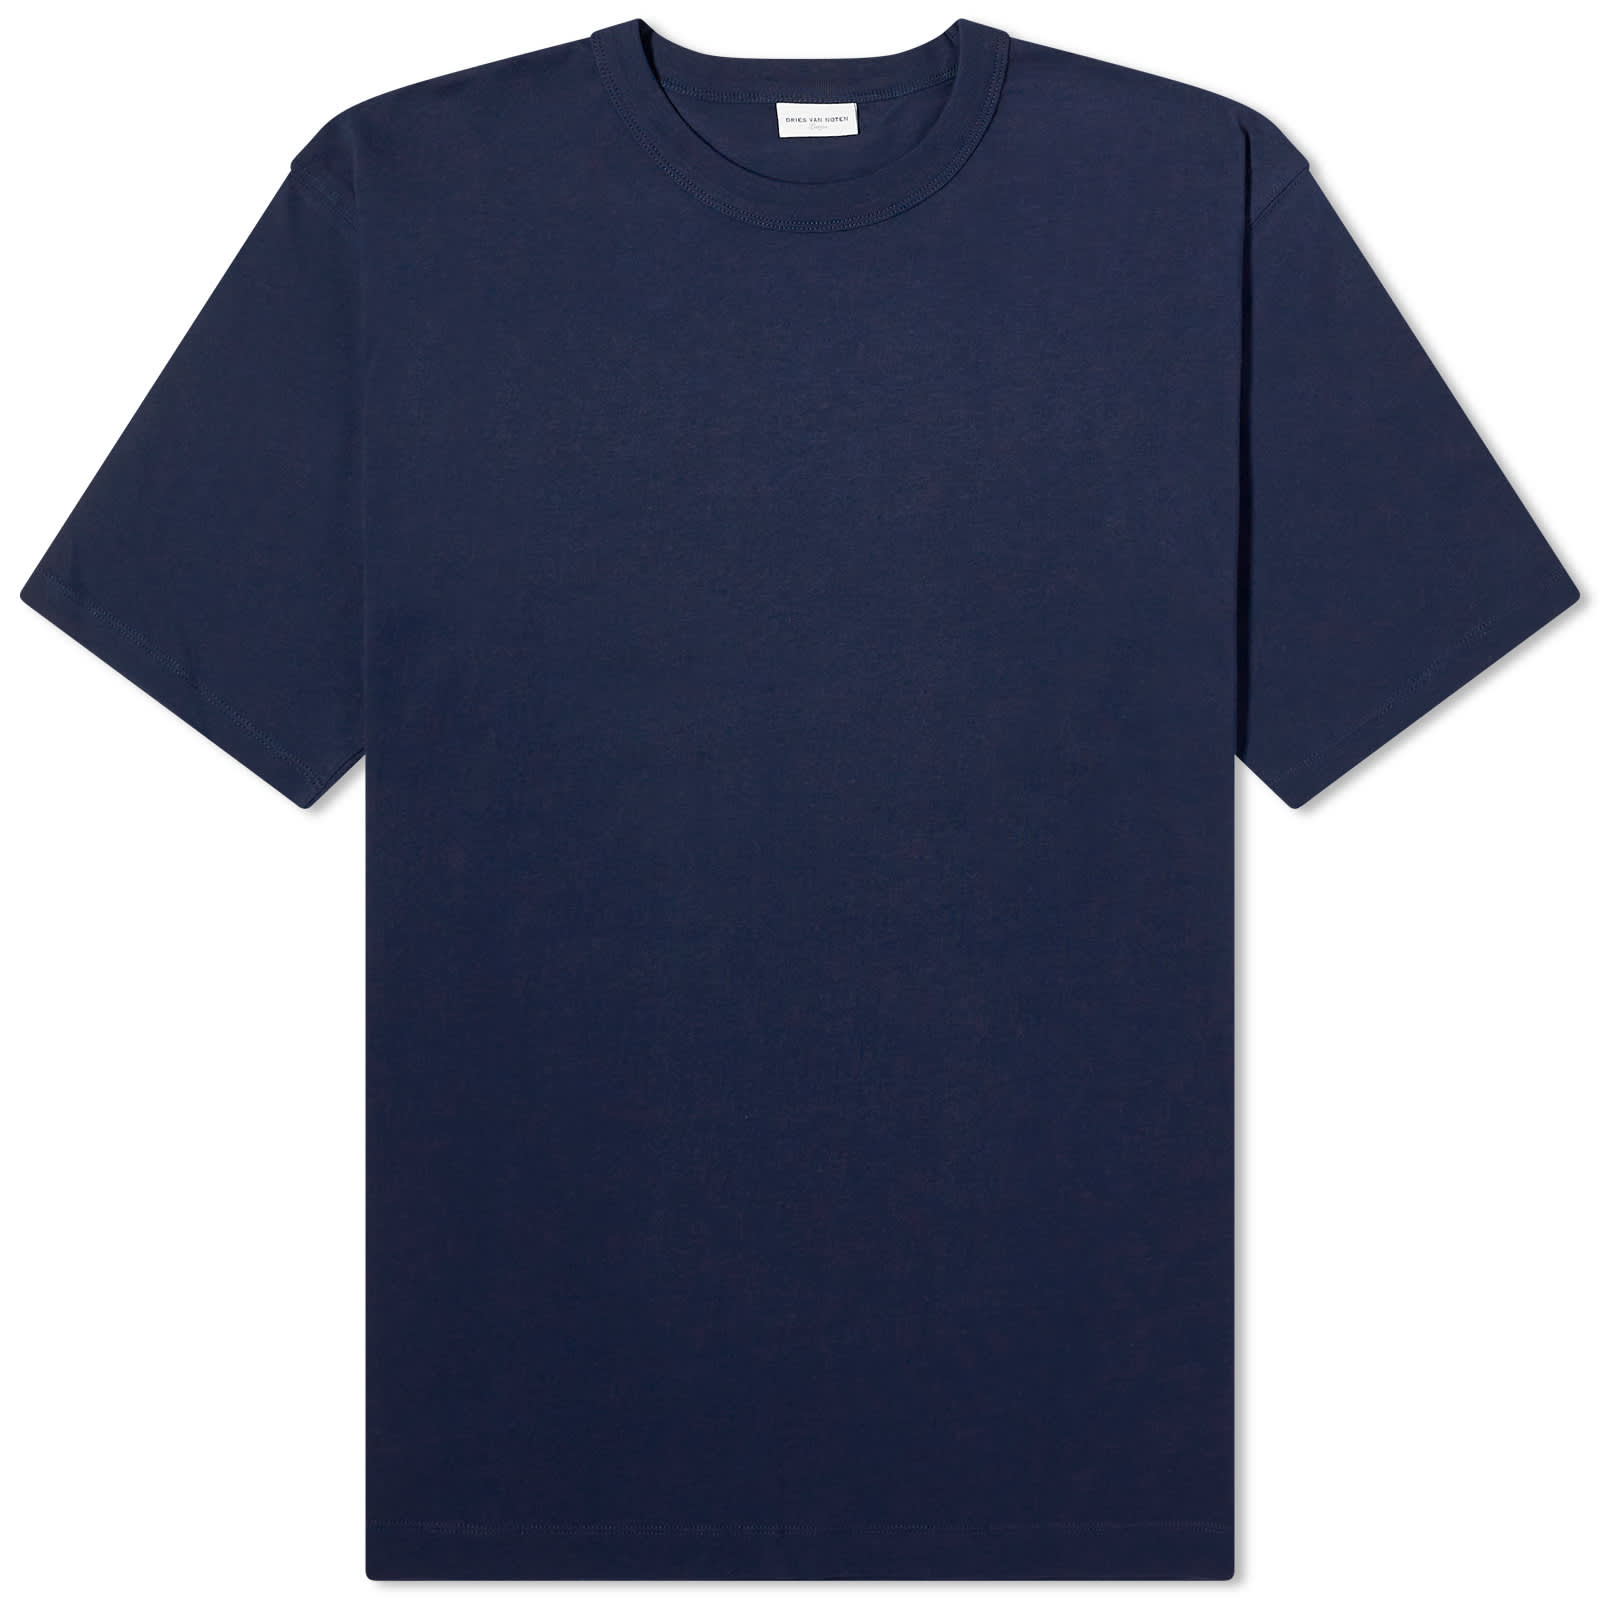 Футболка Dries Van Noten Heer Basic, темно-синий синяя полосатая футболка поло dries van noten